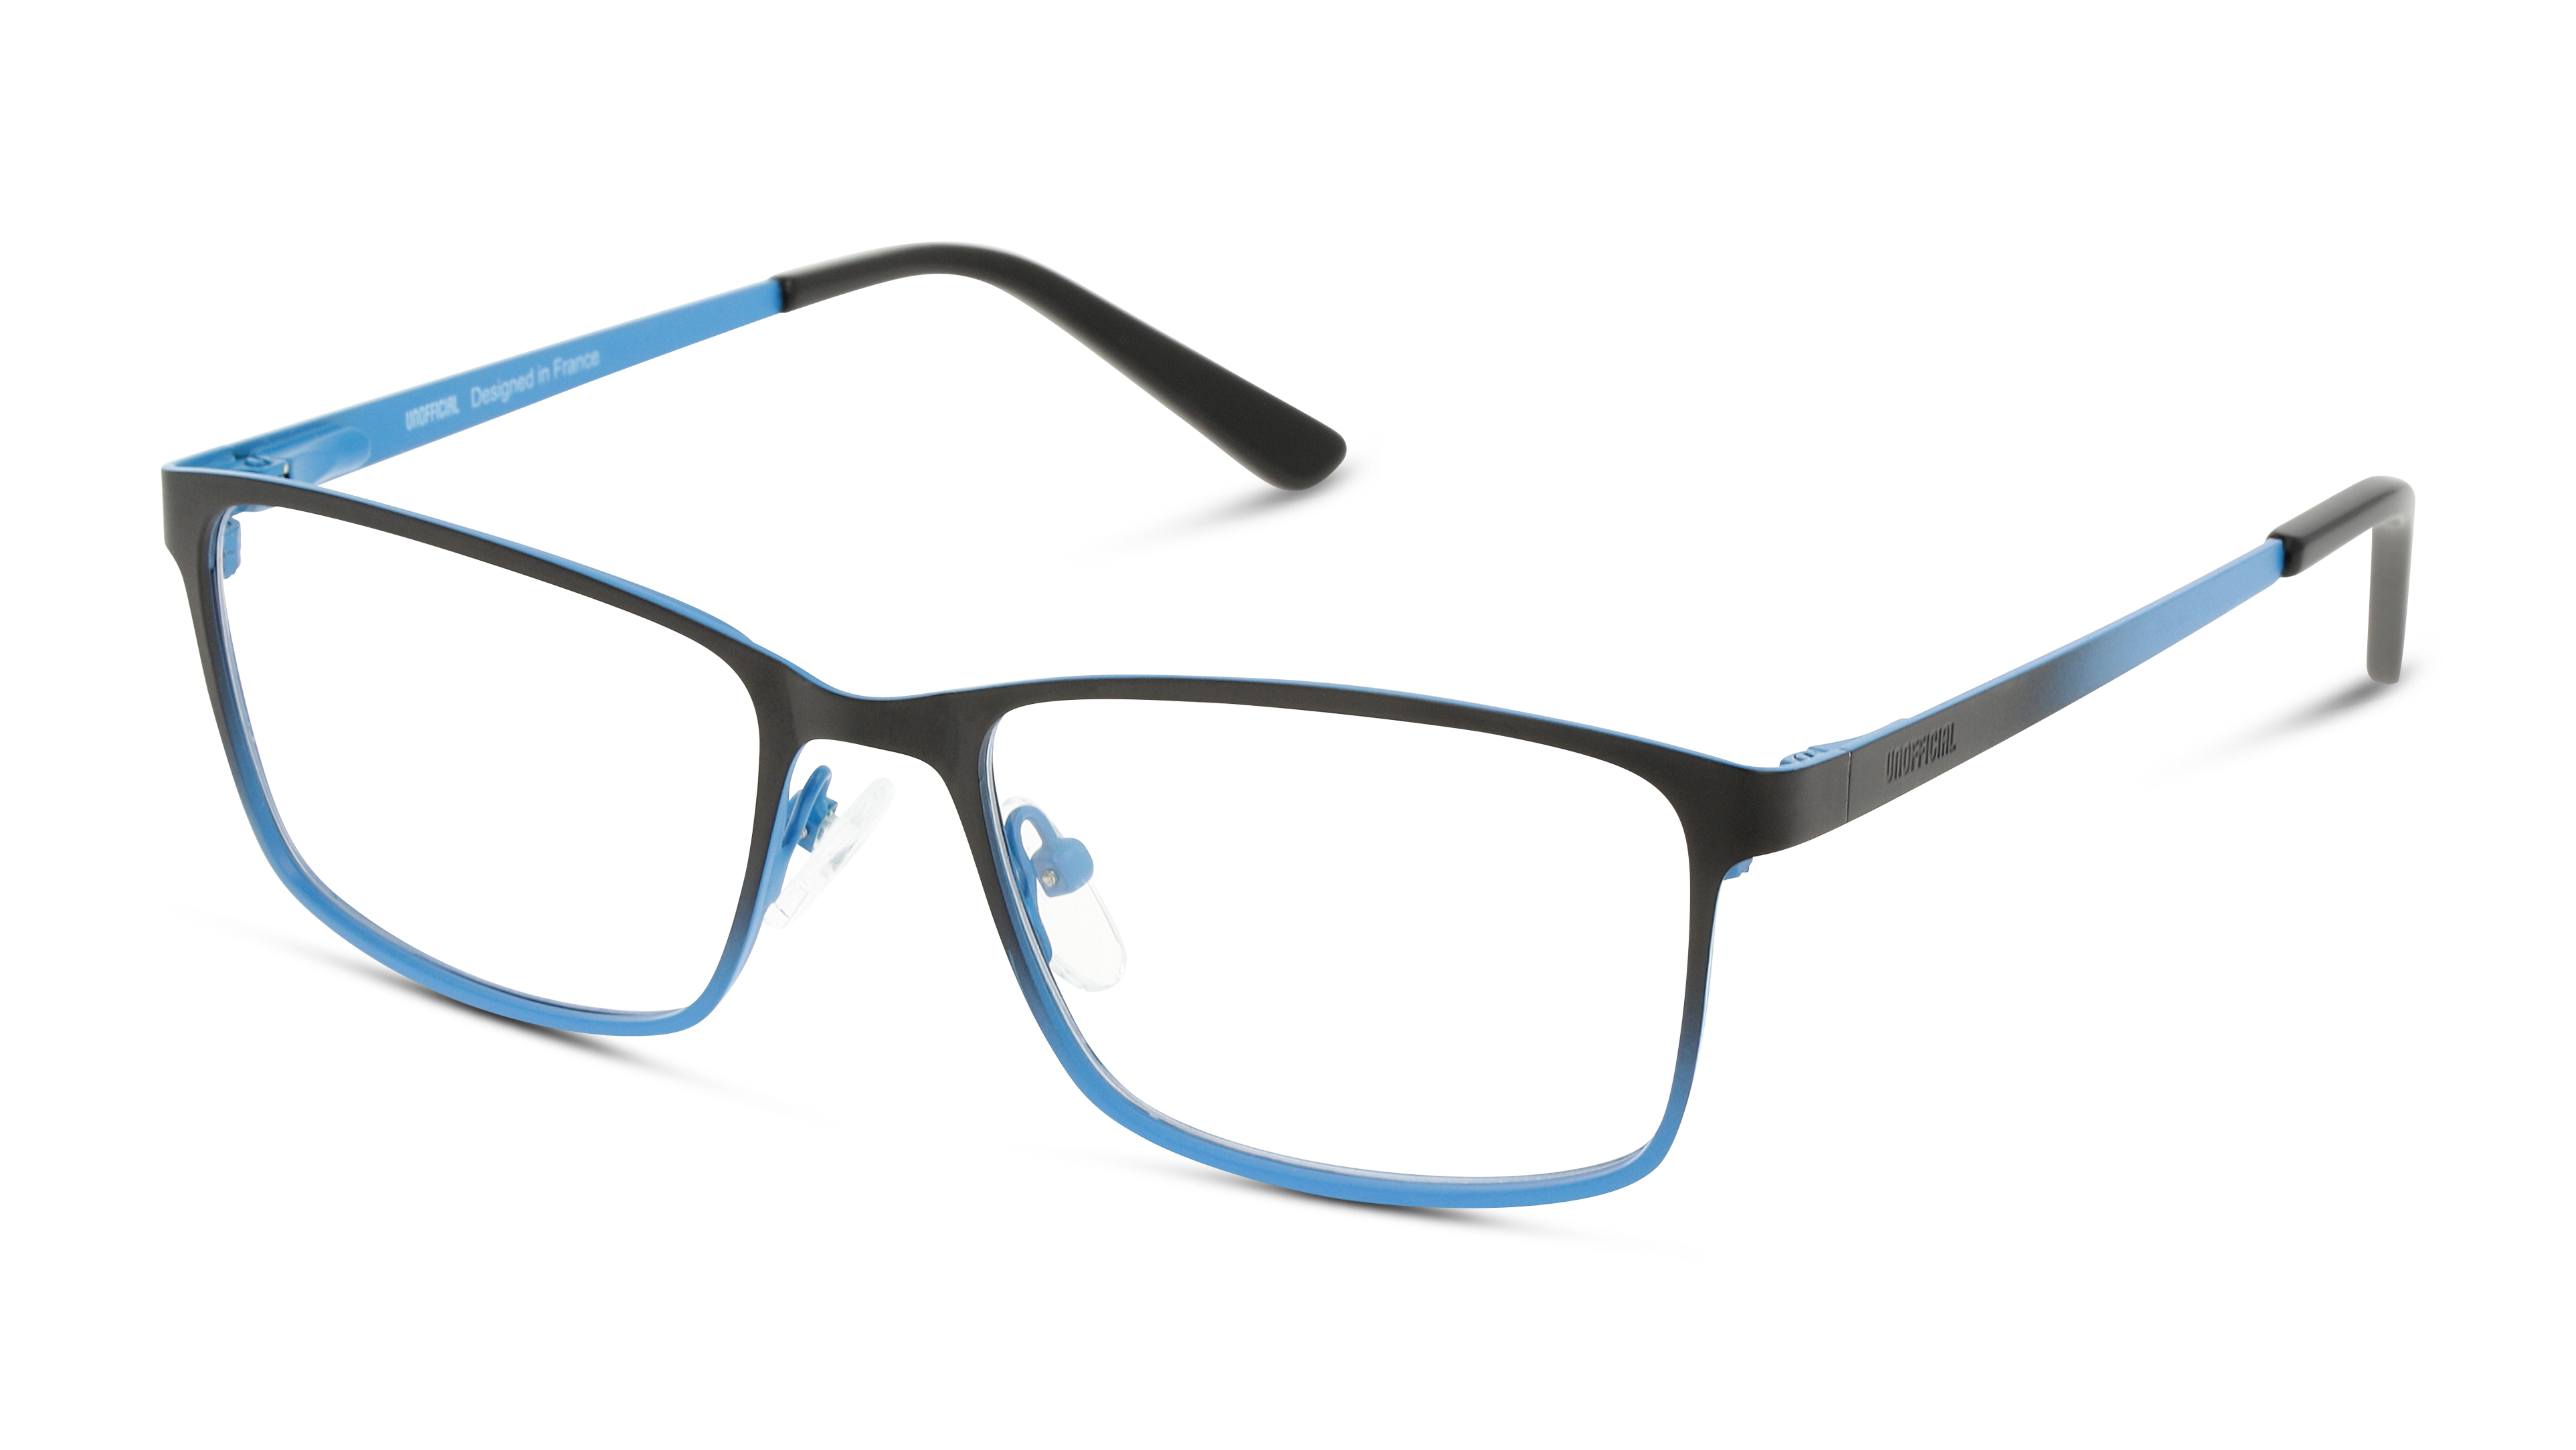 Angle_Left01 Unofficial Kids UNOT0040 (BB00) Children's Glasses Transparent / Blue